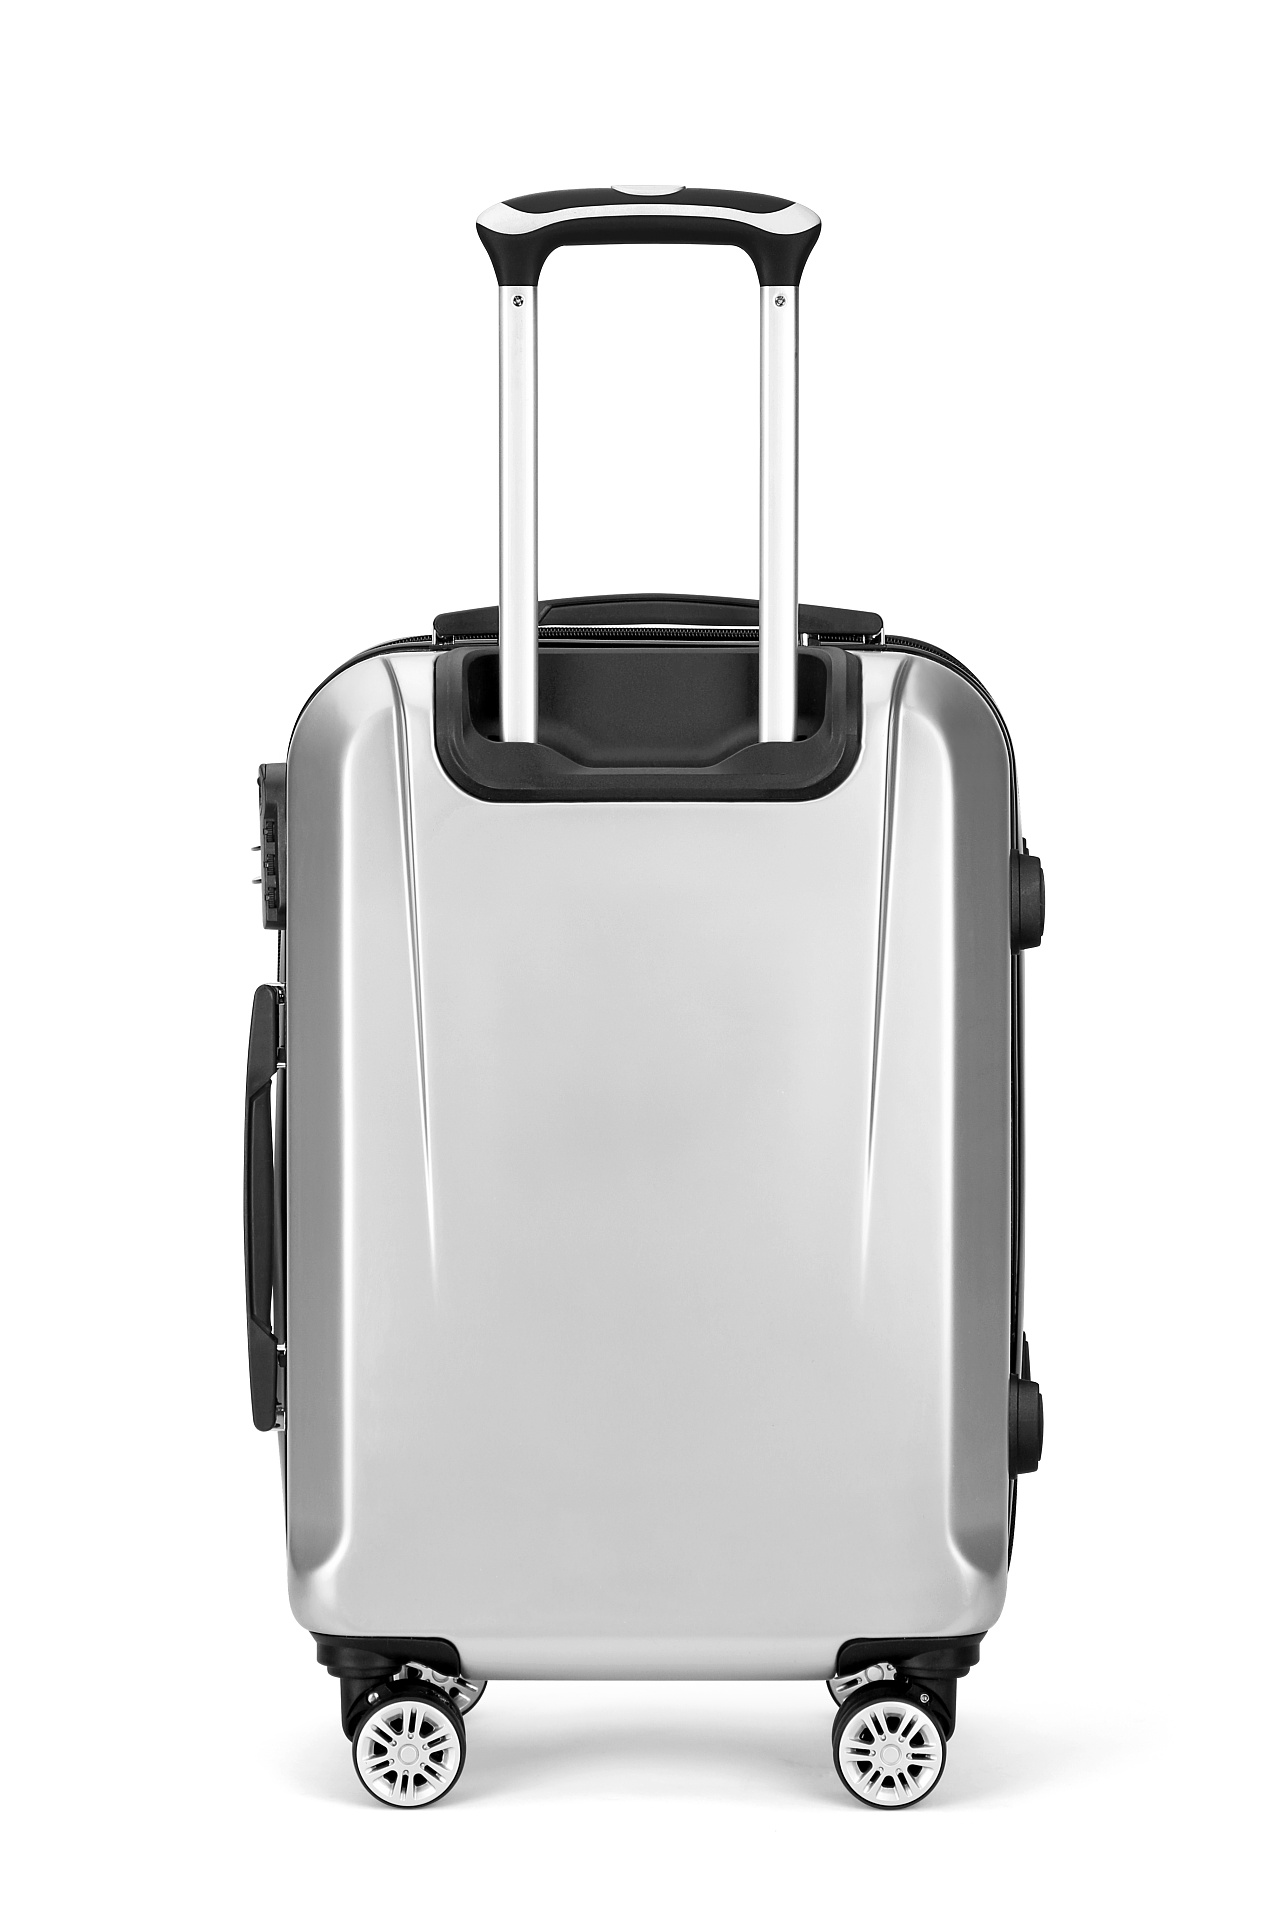 Thule Revolve 行李箱：坚固耐用且保护性强，您的理想选择~ - 普象网